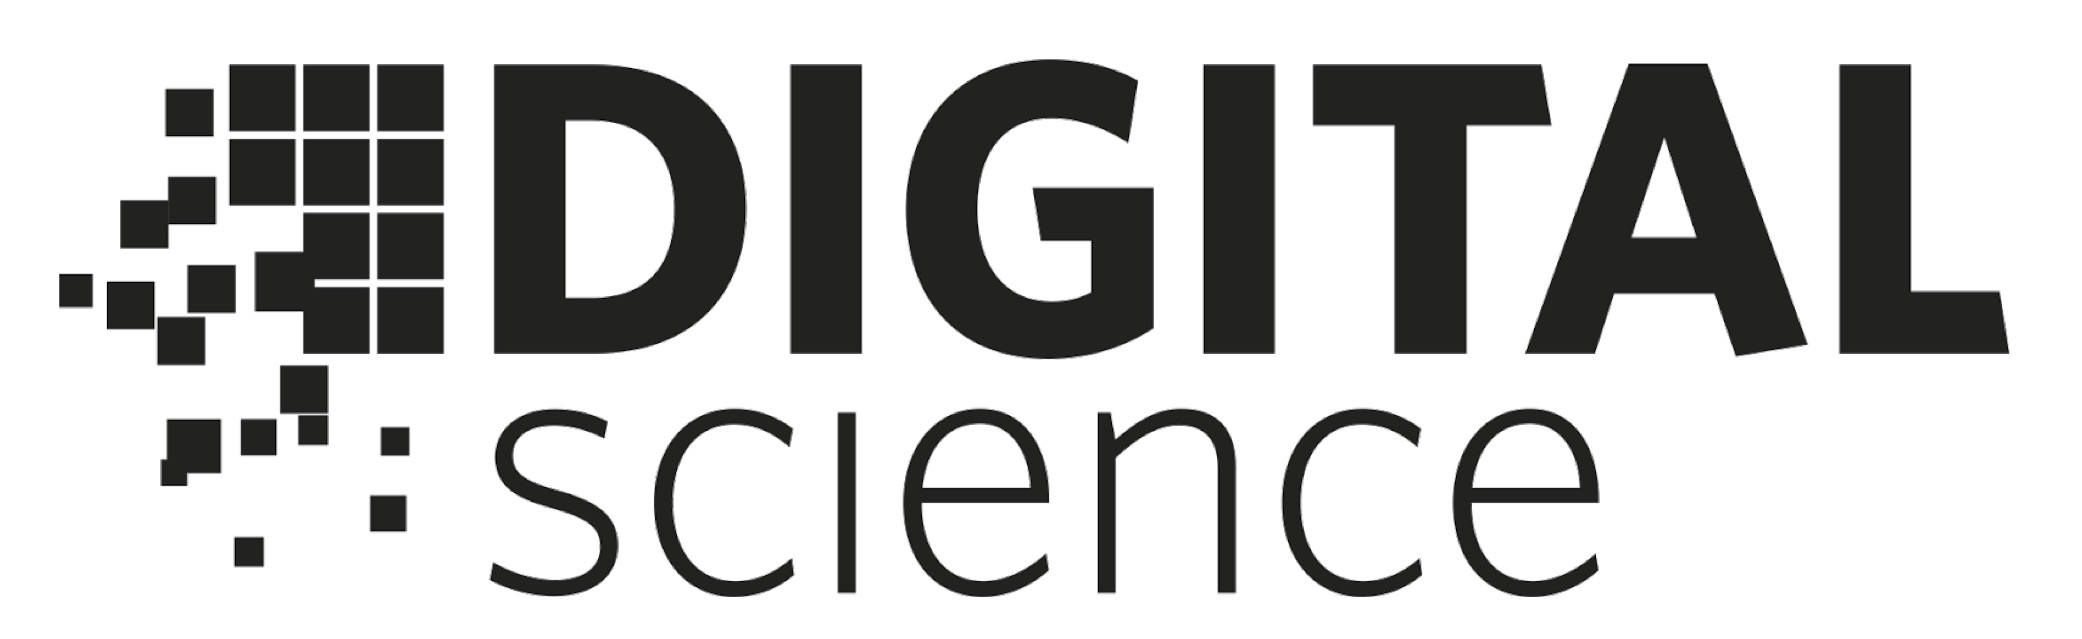 institutions-digital-science-logo20220321191529.jpg